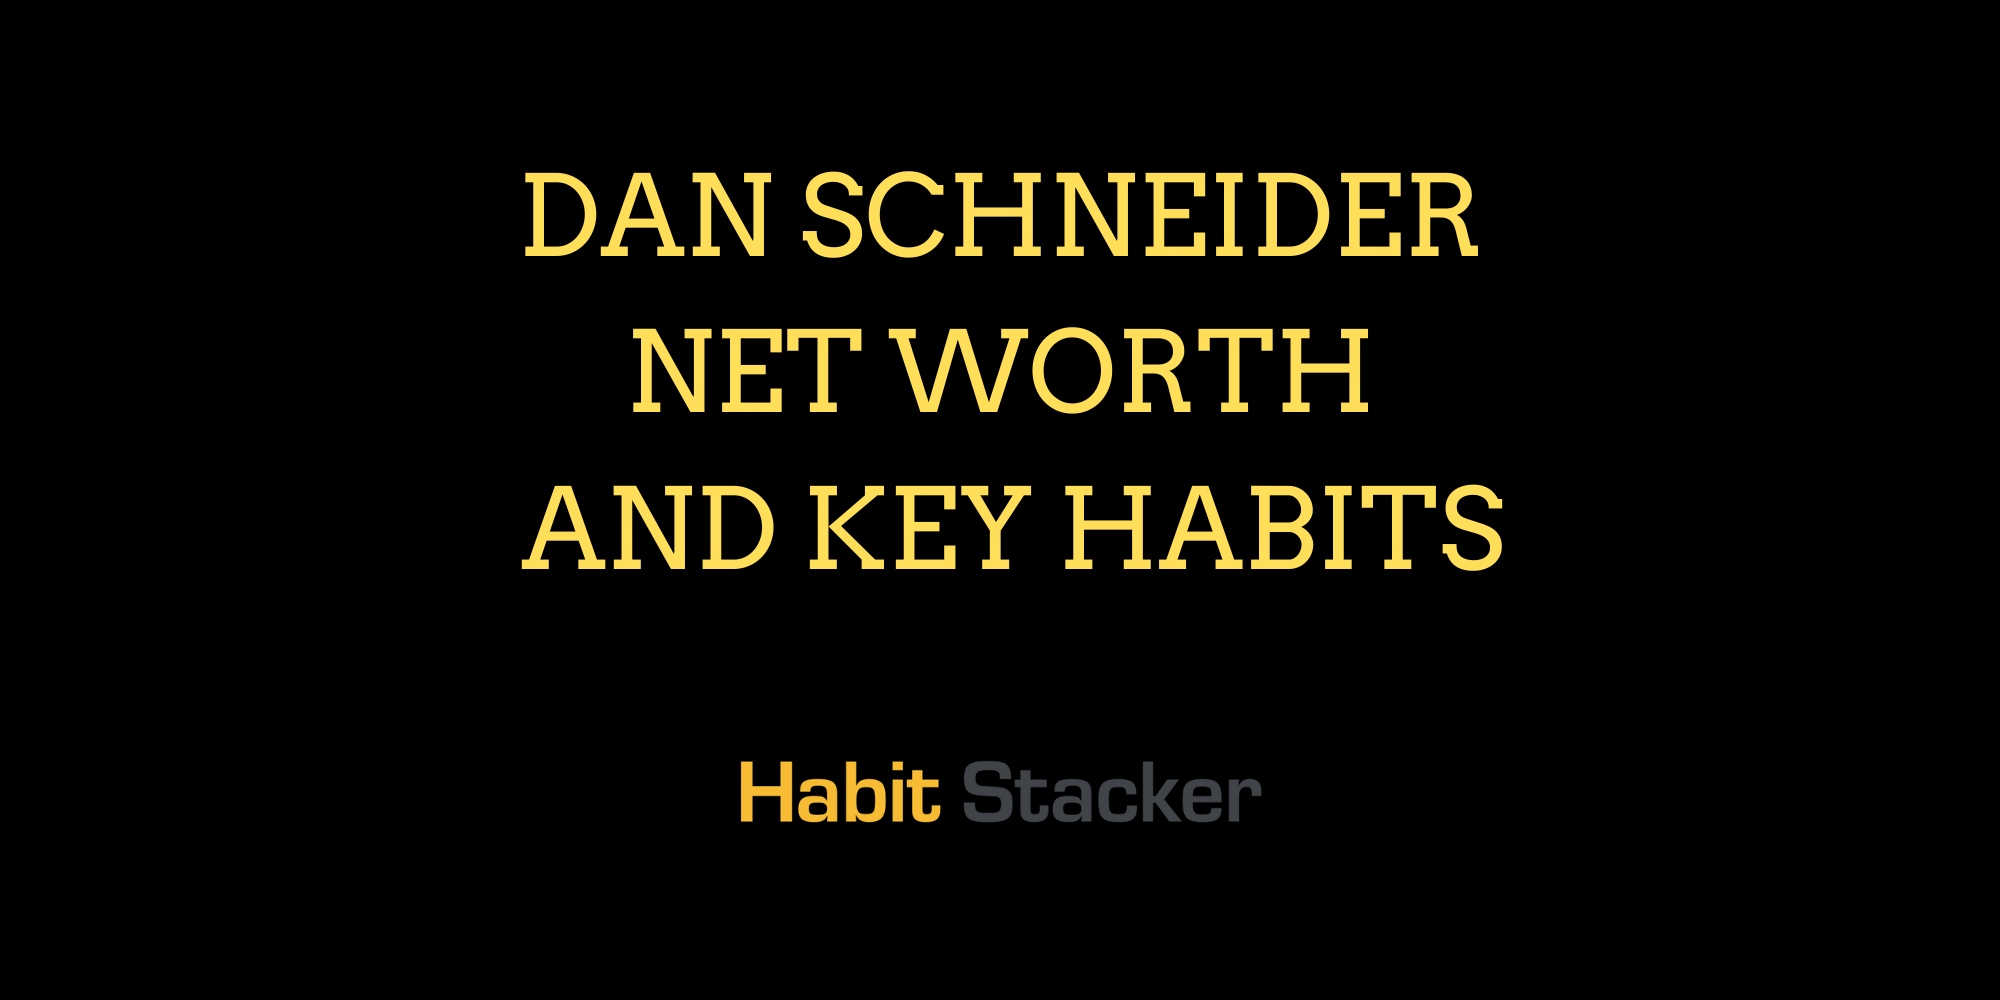 Dan Schneider Net Worth and Key Habits